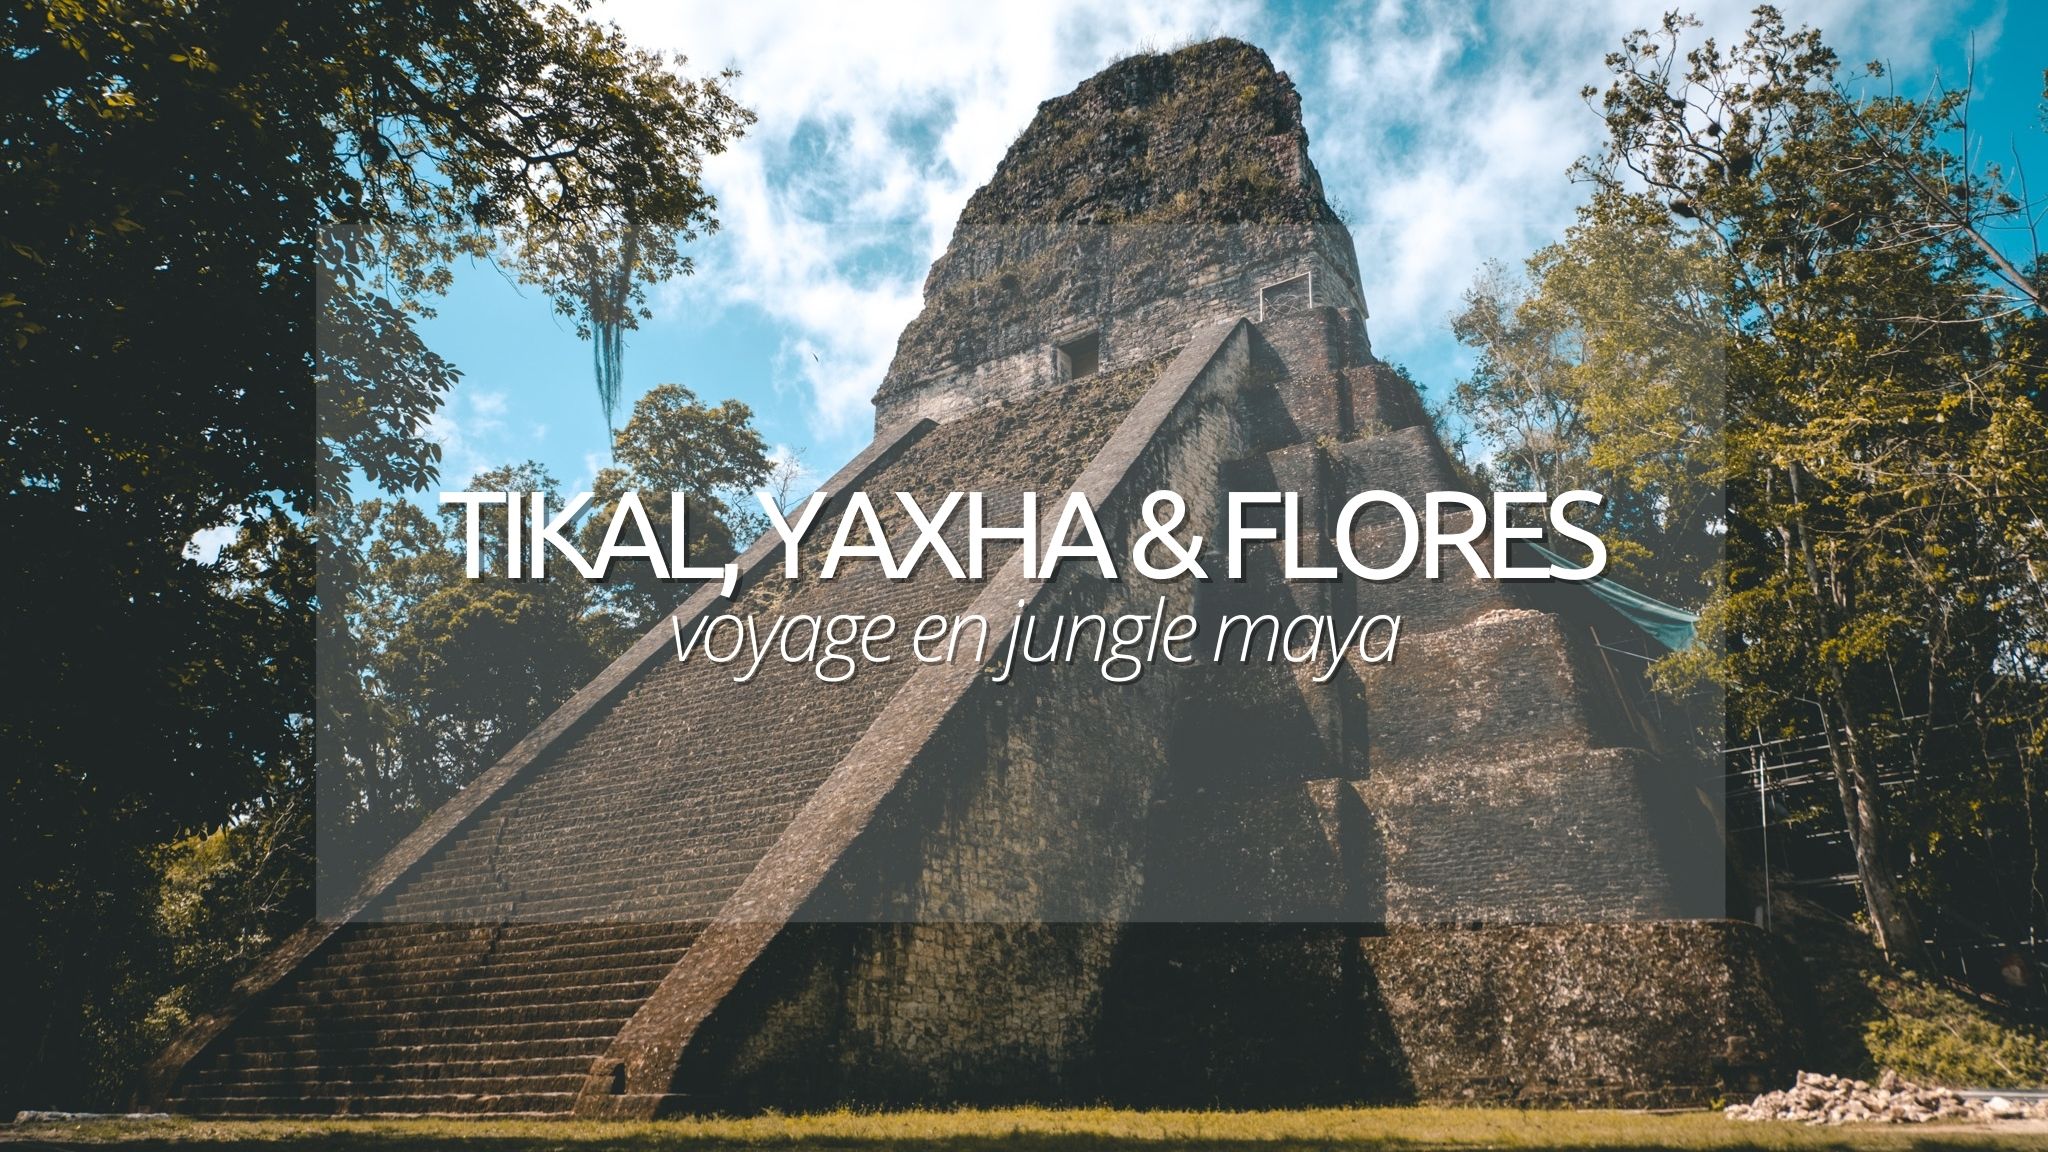 Visiter Tikal, Yaxha et Flores au Guatemala : voyage en pleine jungle maya.